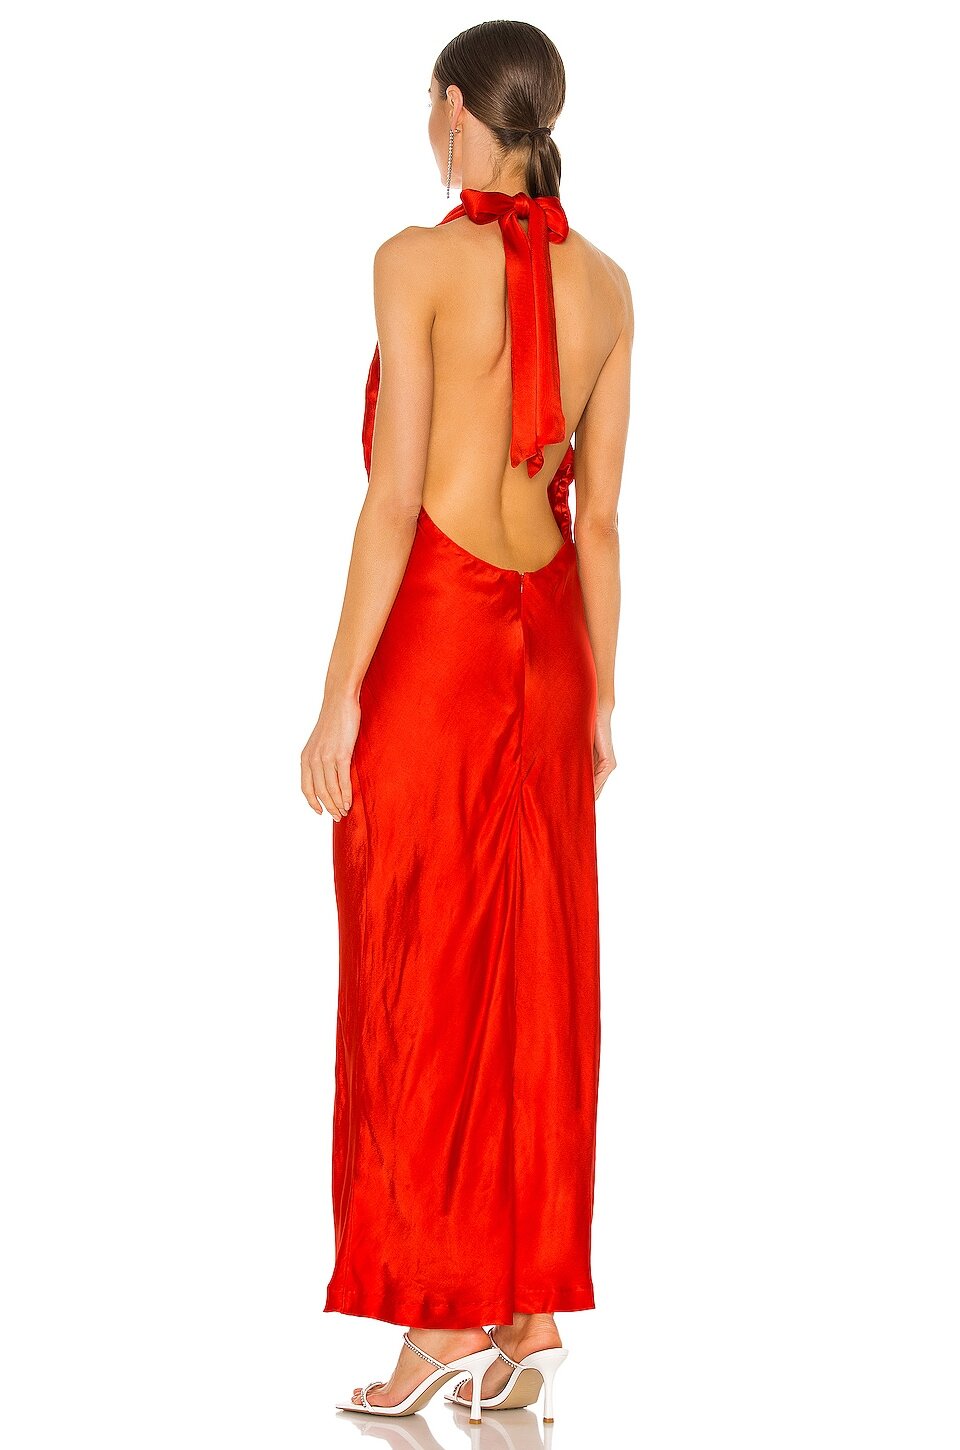 Bardot - Claudia Bias Cut Dress - Lipstick Red